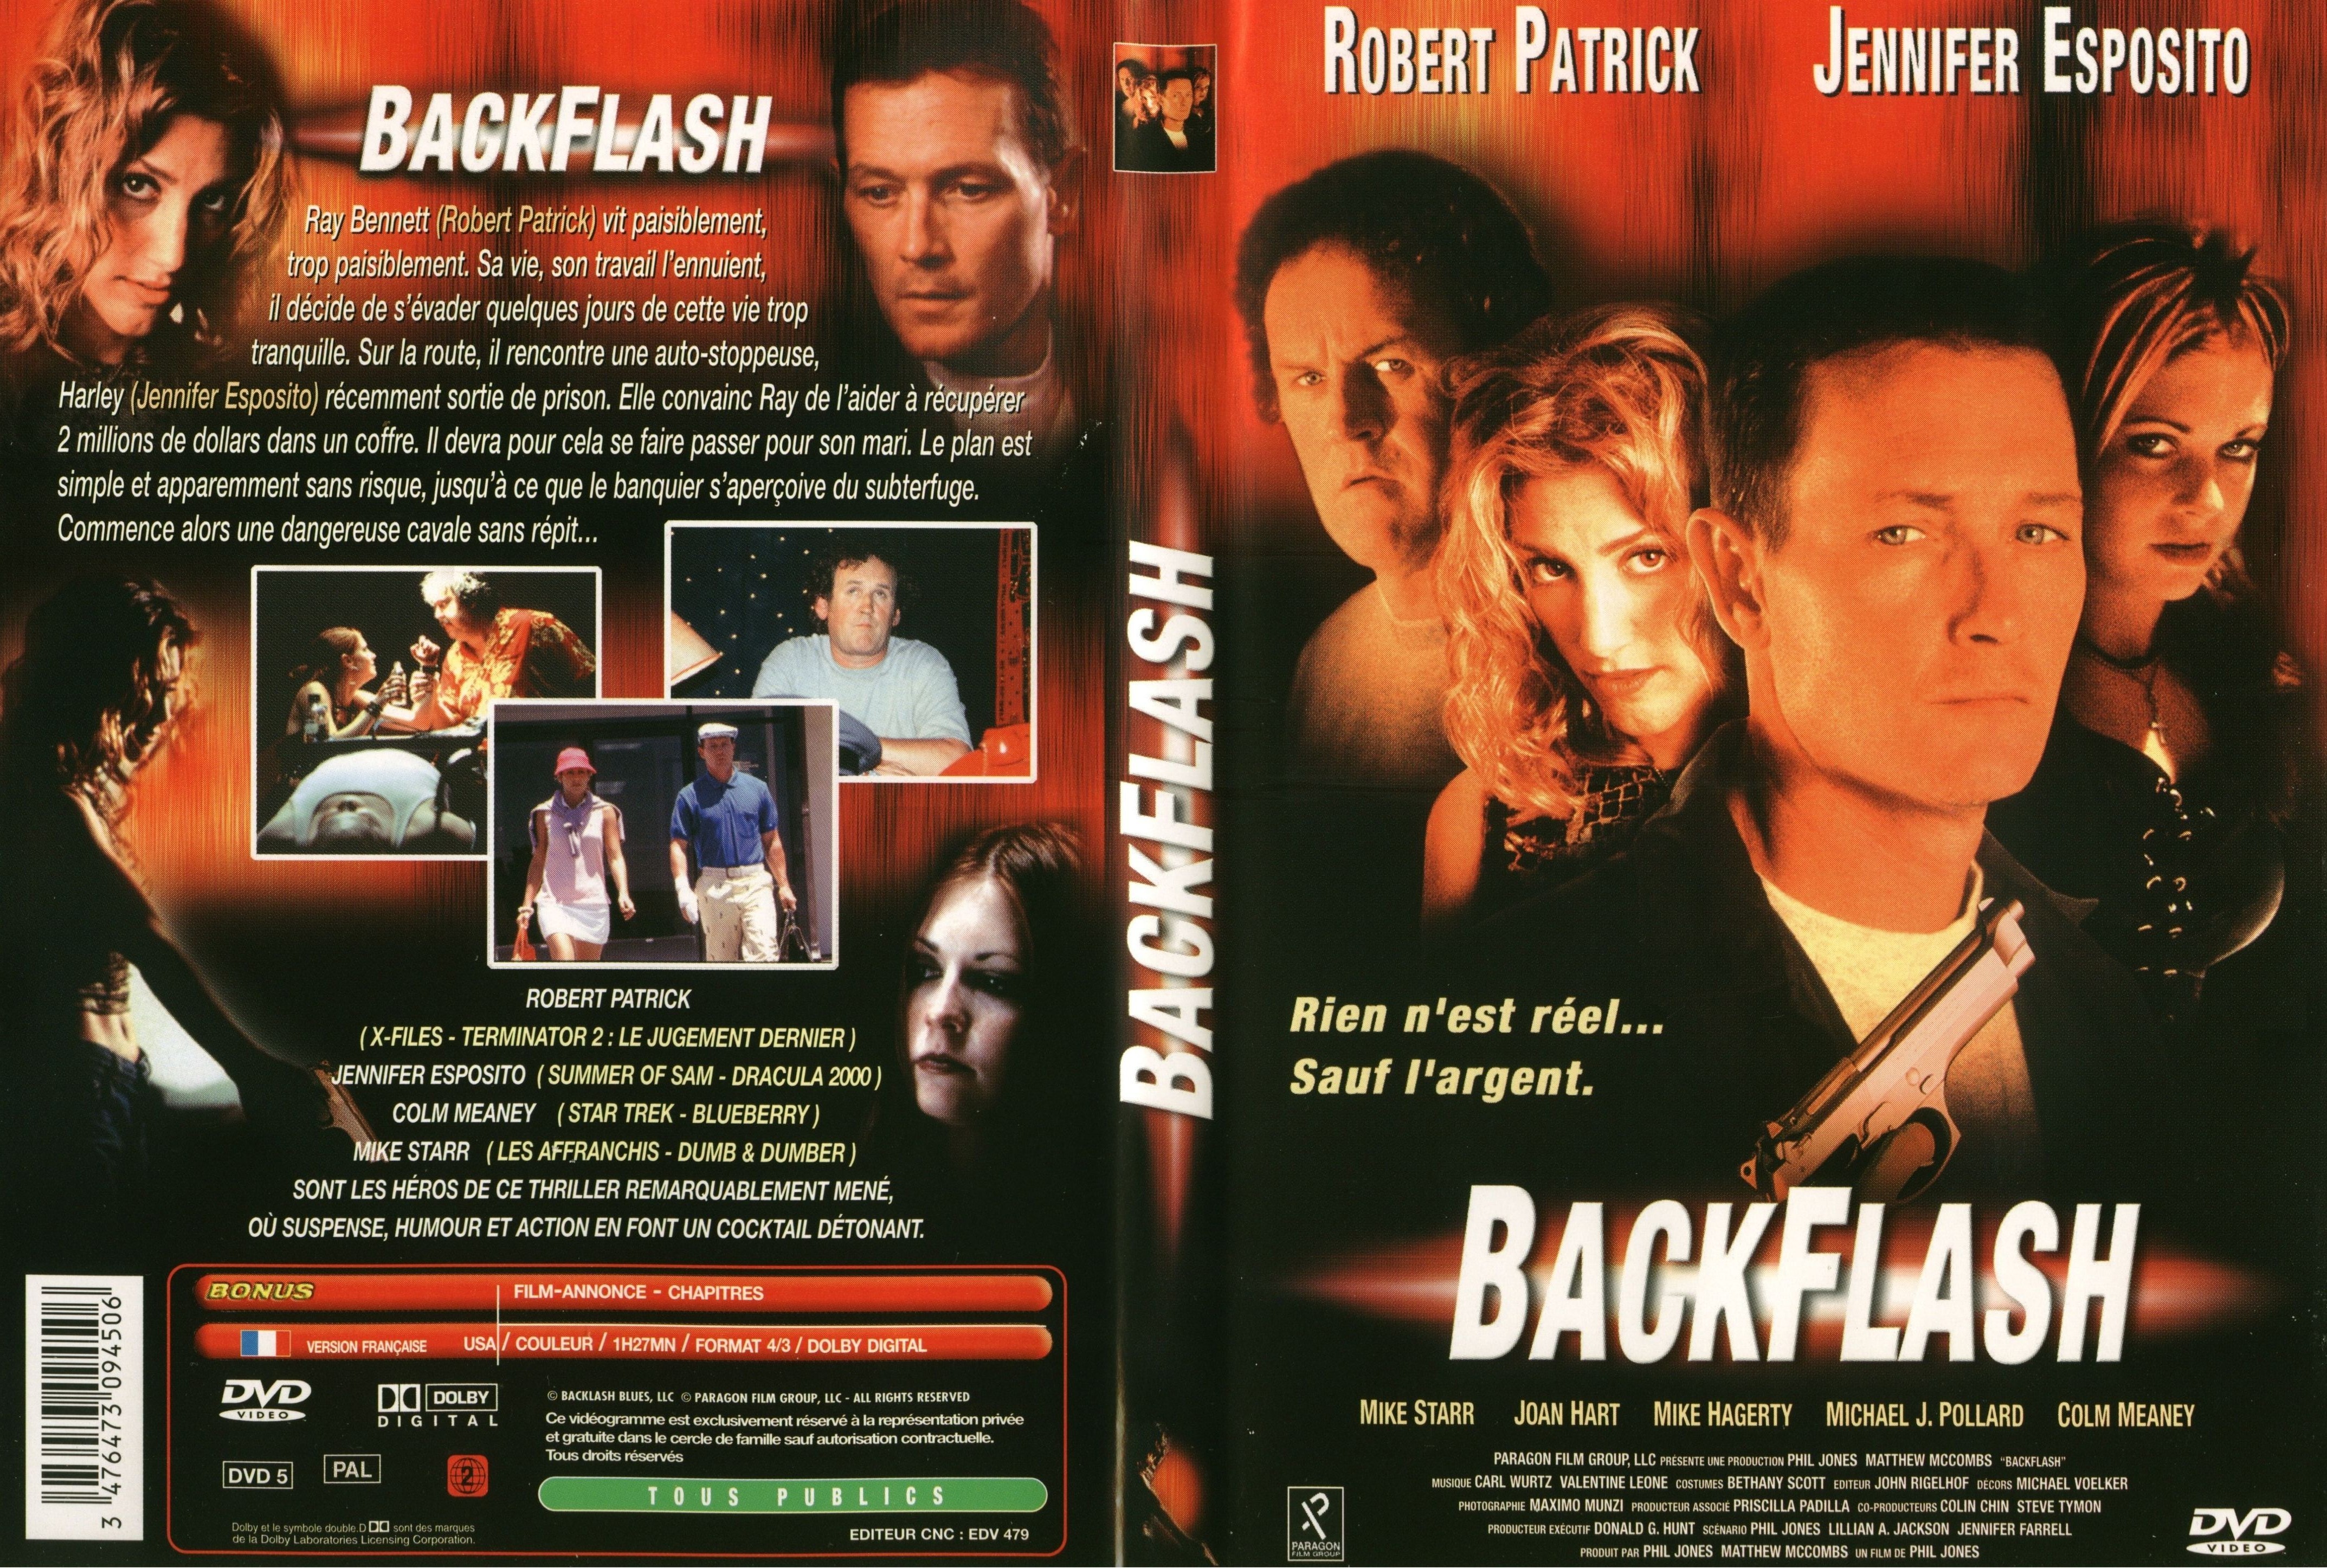 Jaquette DVD Backflash